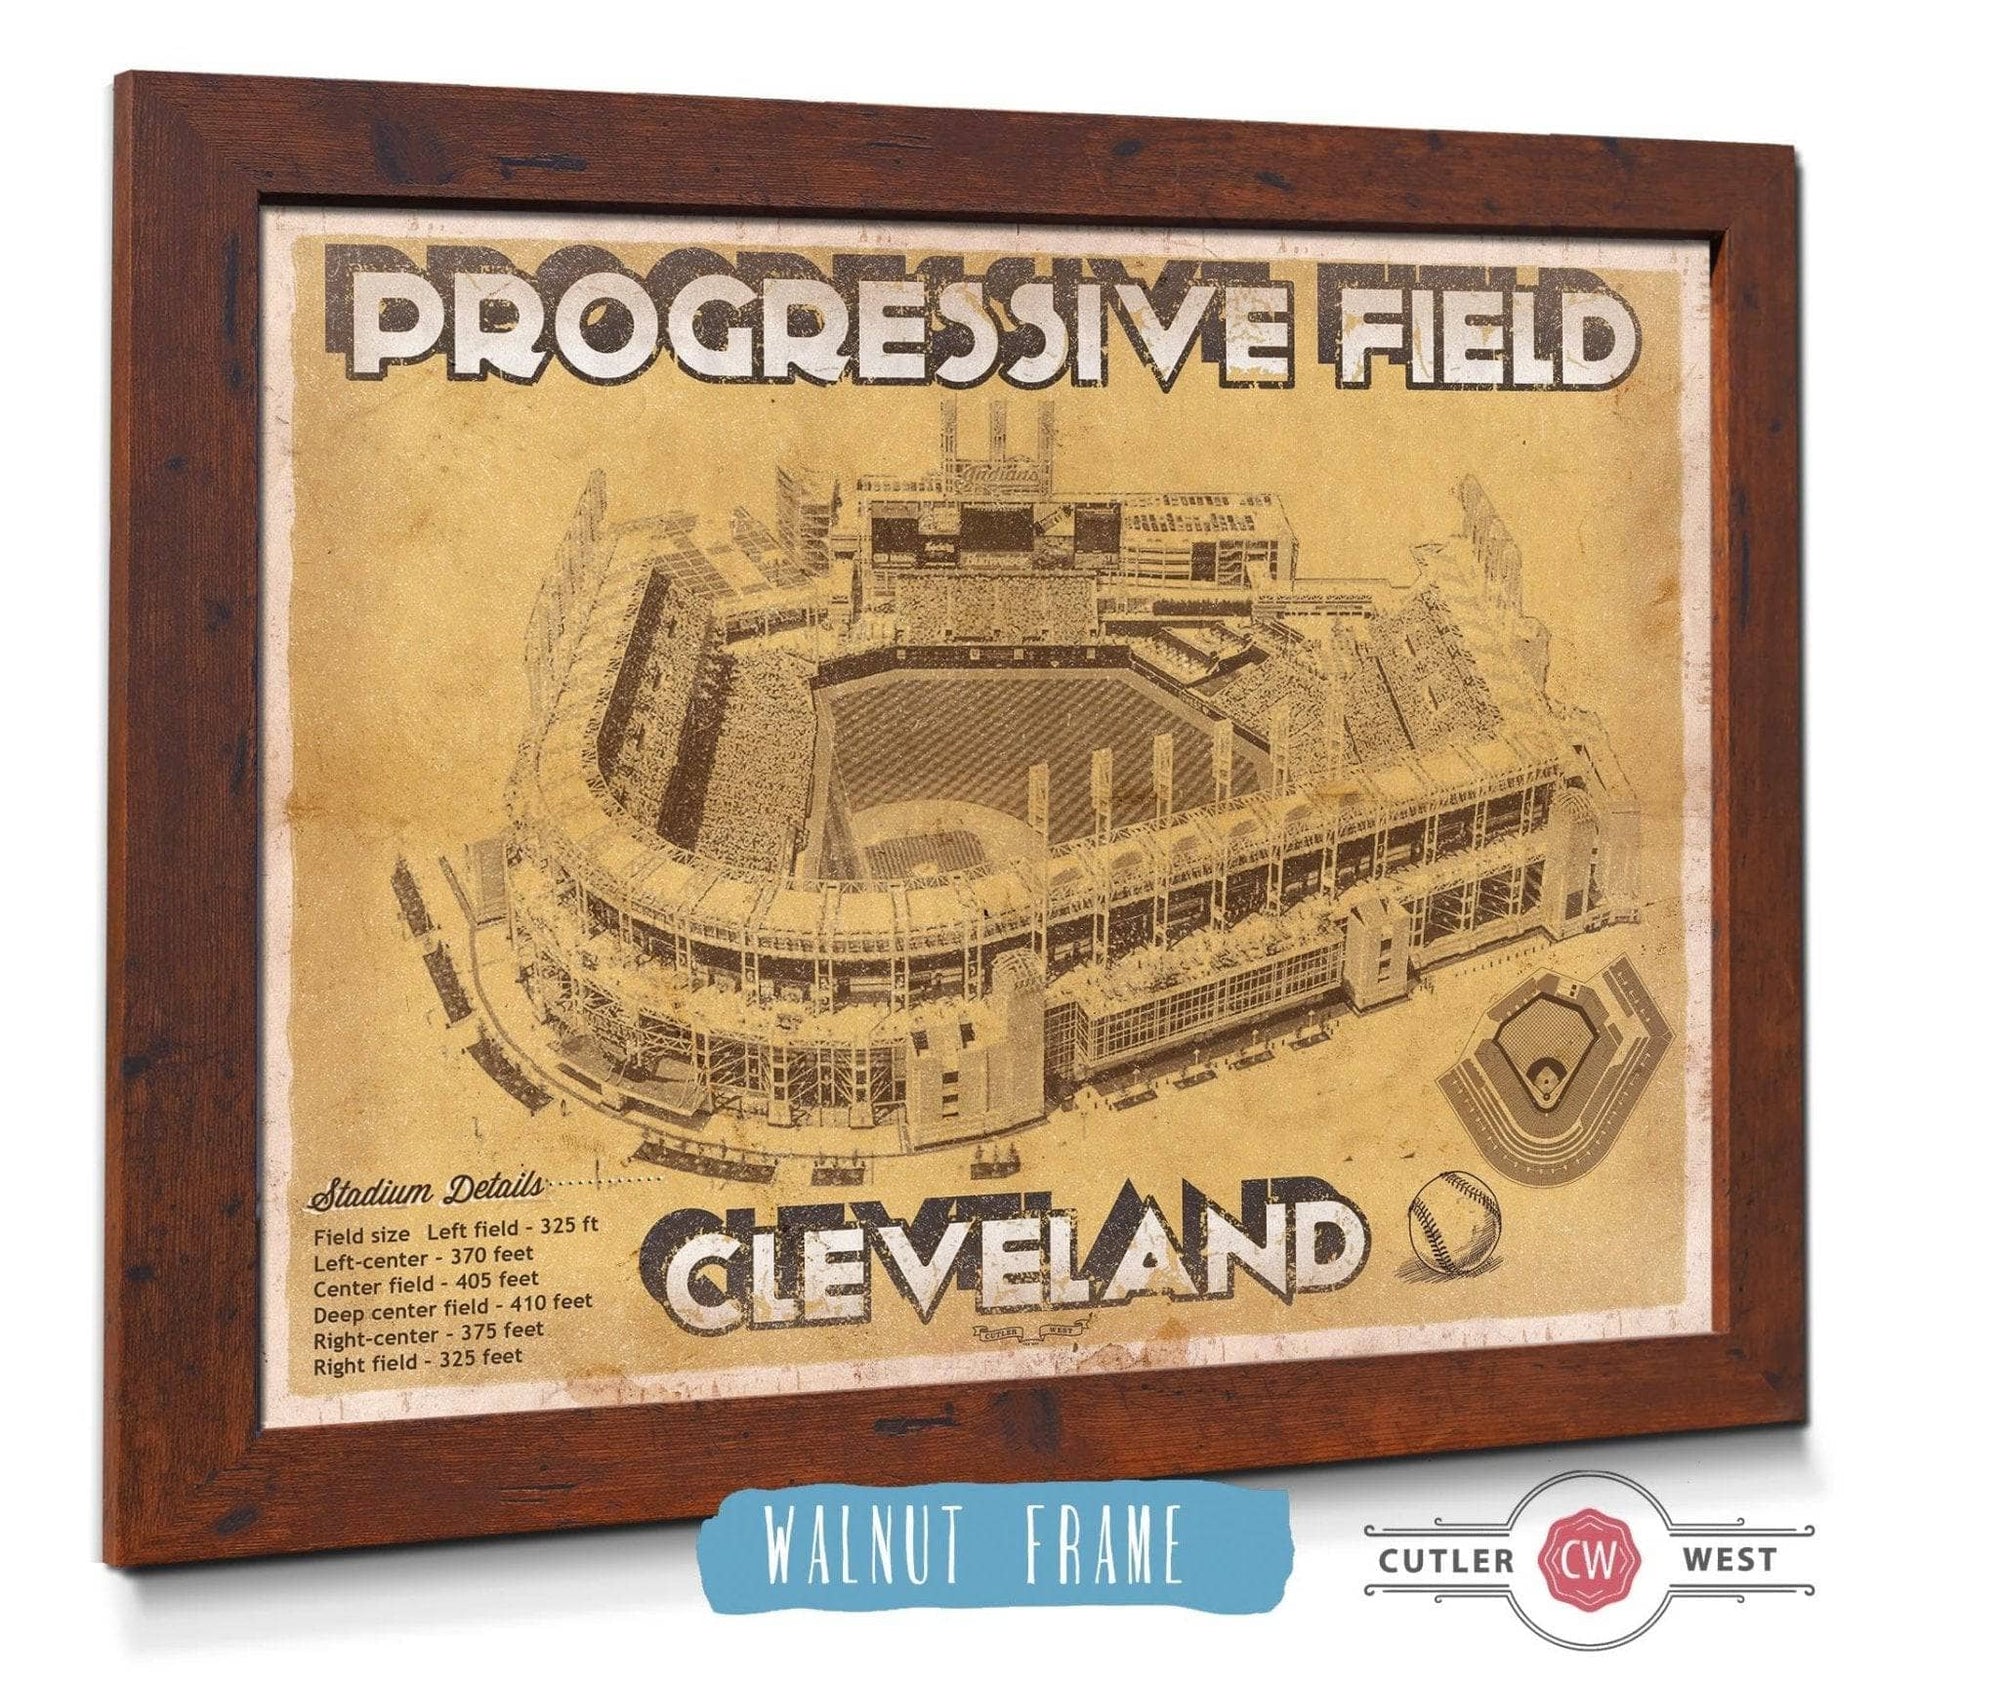 Cutler West Baseball Collection Cleveland Indians Progressive Field Vintage Baseball Print